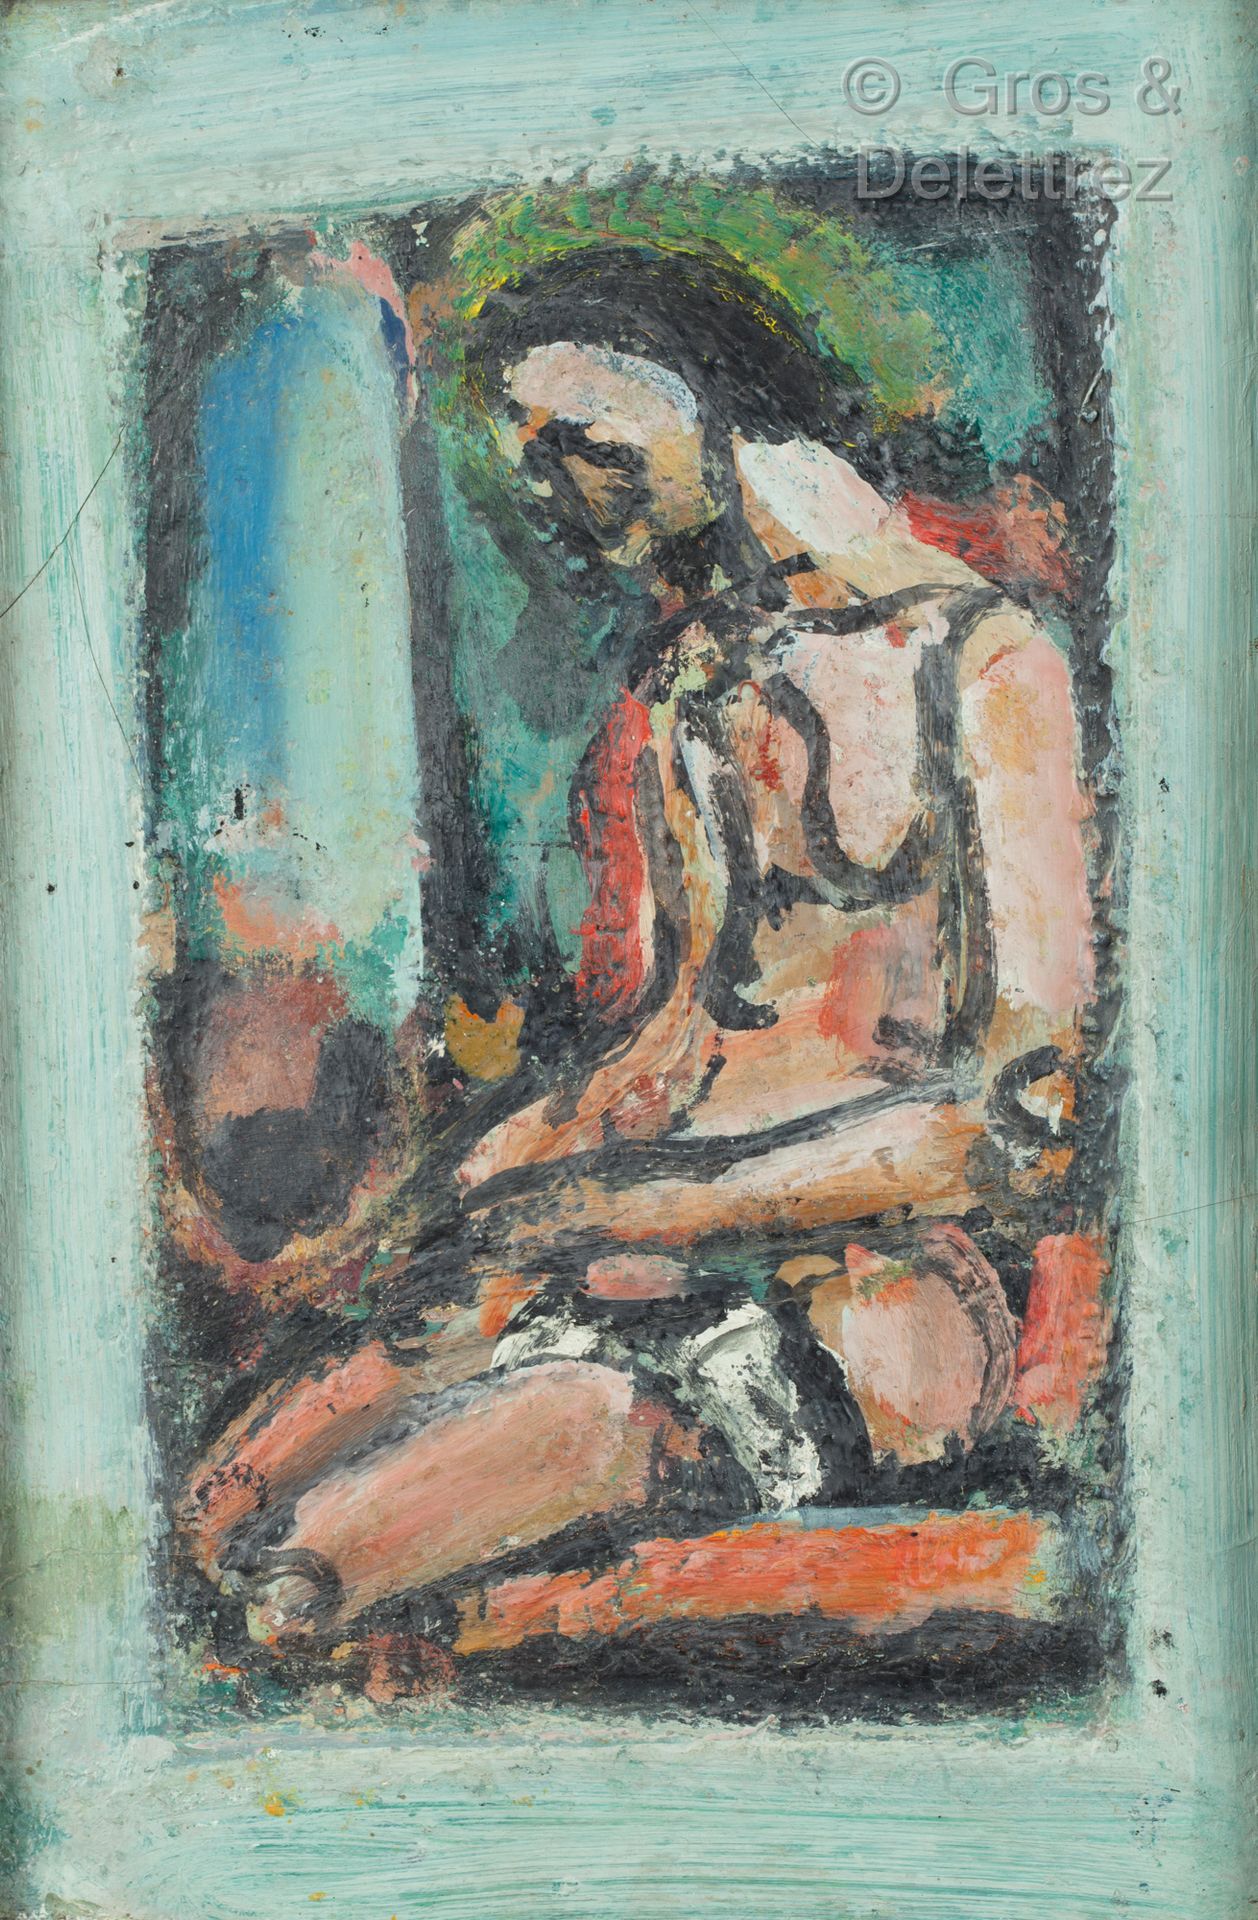 Georges ROUAULT (1871-1958) 
激情，约1938年




镶木板上的油画。 




无符号




40 x 27 cm




&hellip;